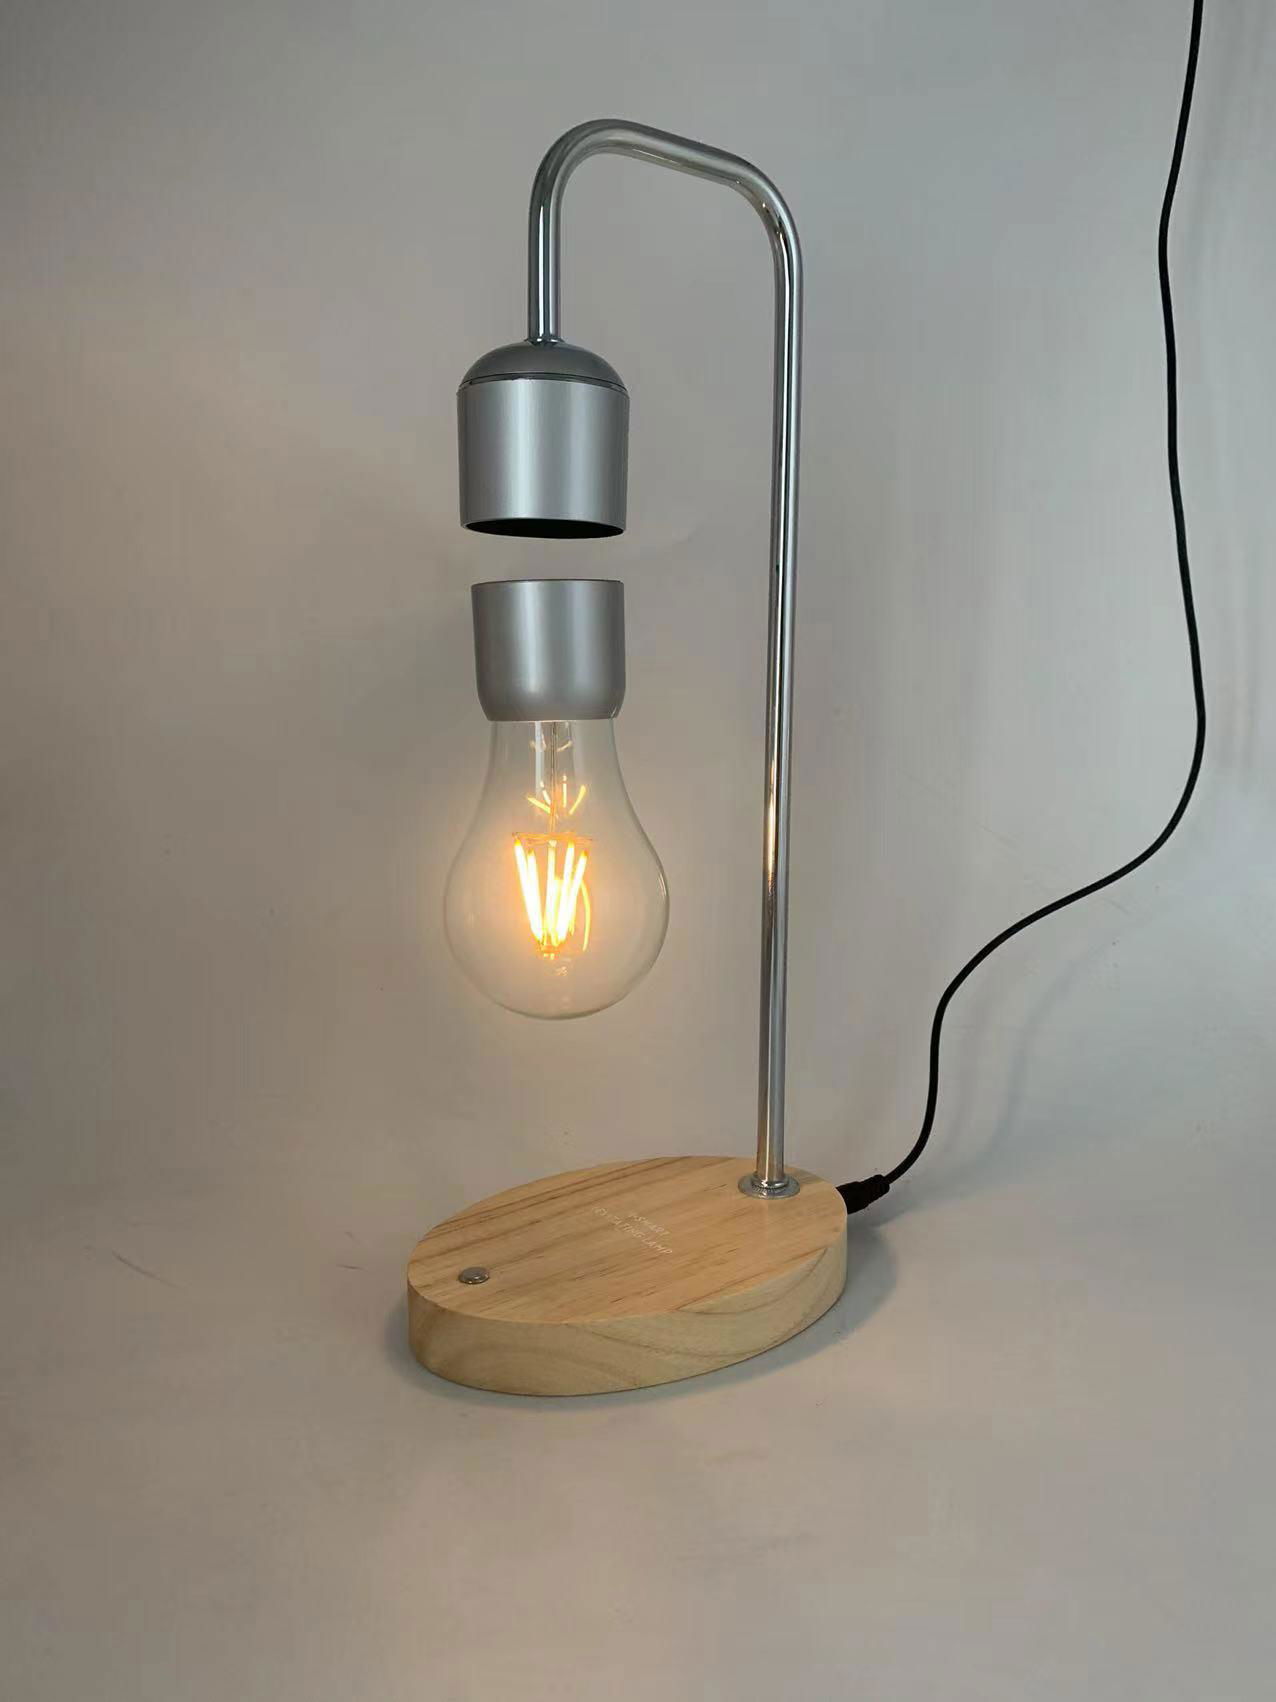 360 spinning magnetic levitation floating rotating night light lamp bulb  2